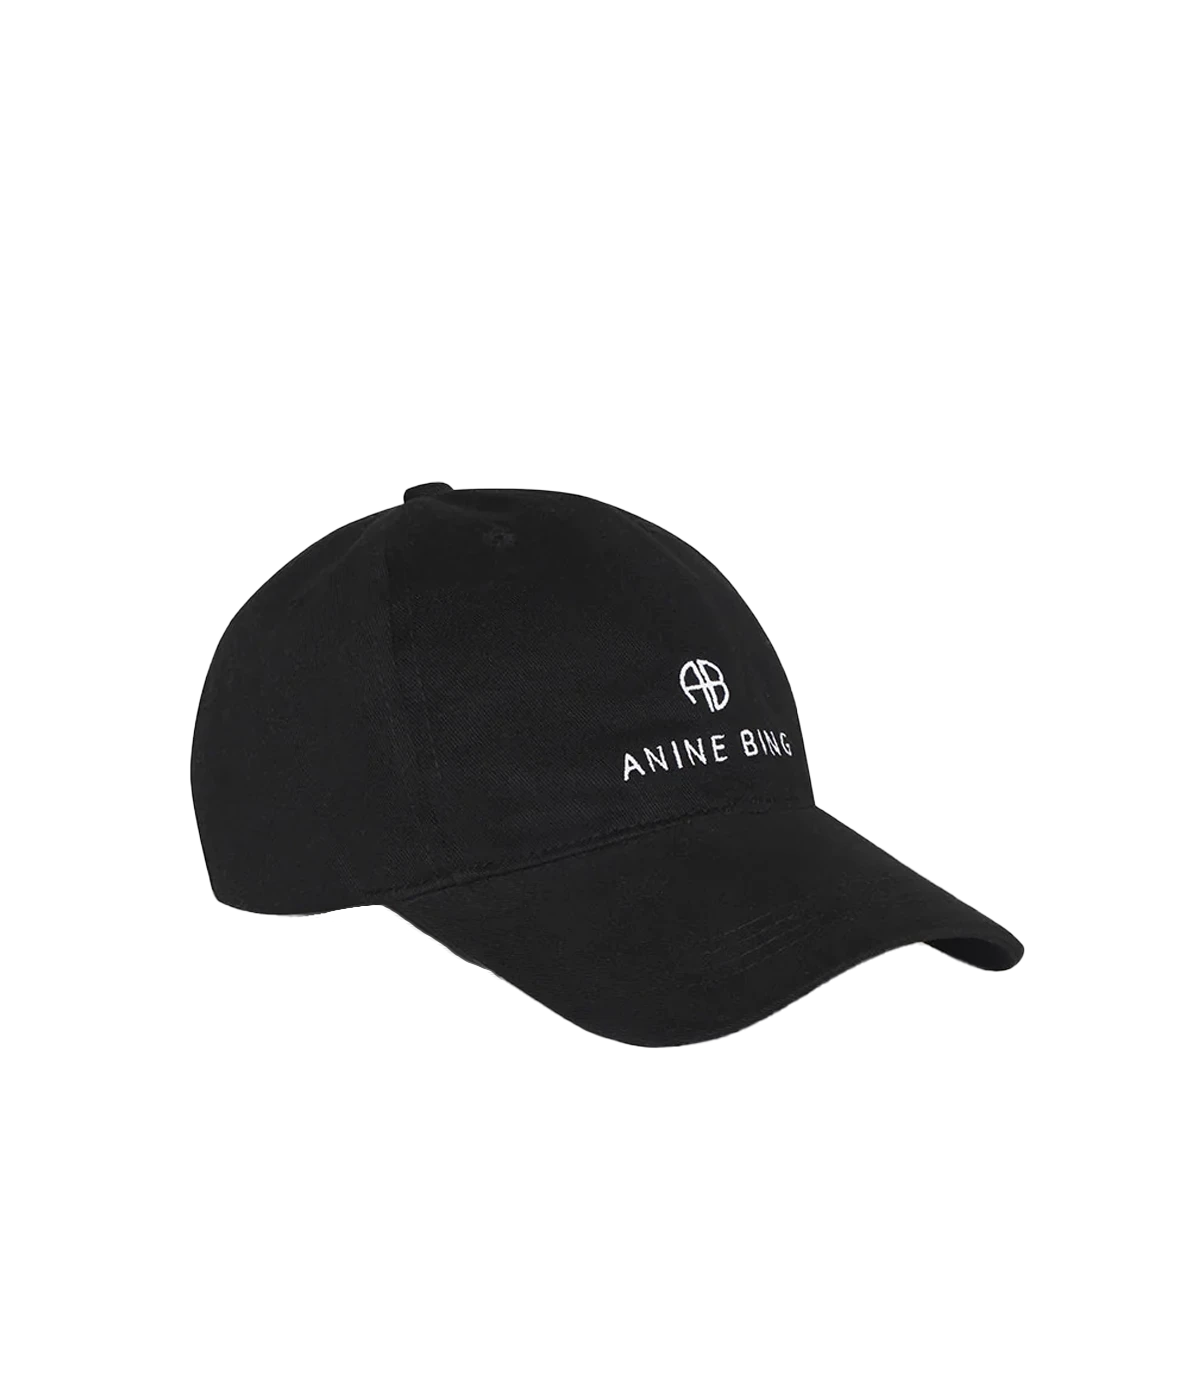 Jeremy Anine Bing Baseball Cap in Black